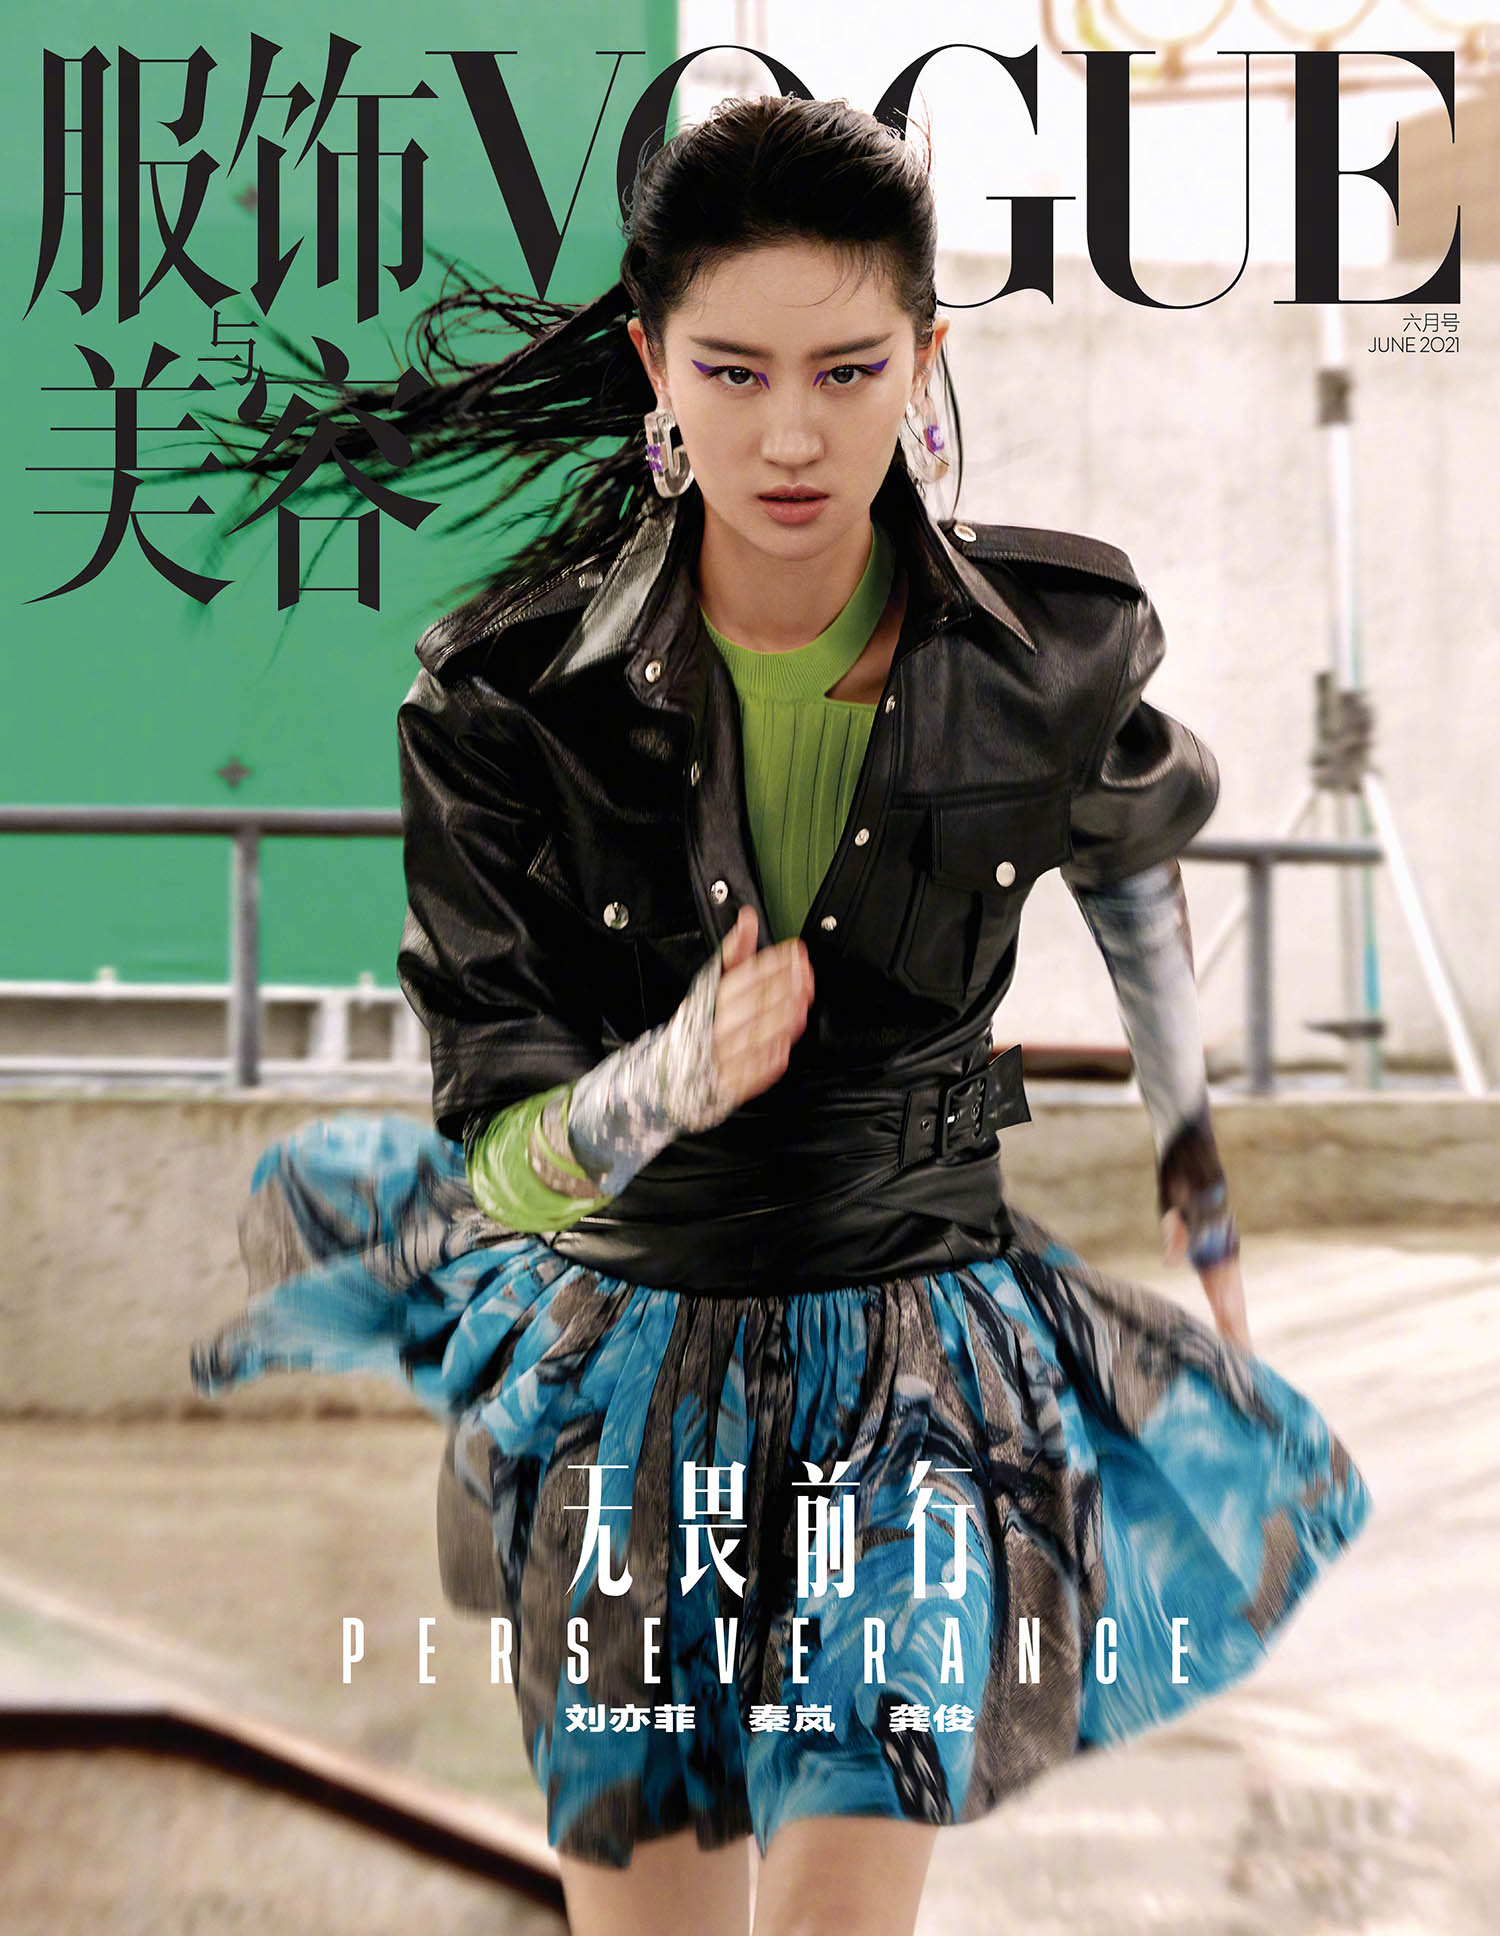 Liu Yifei covers Vogue China June 2021 by Jumbo Tsui - fashionotography